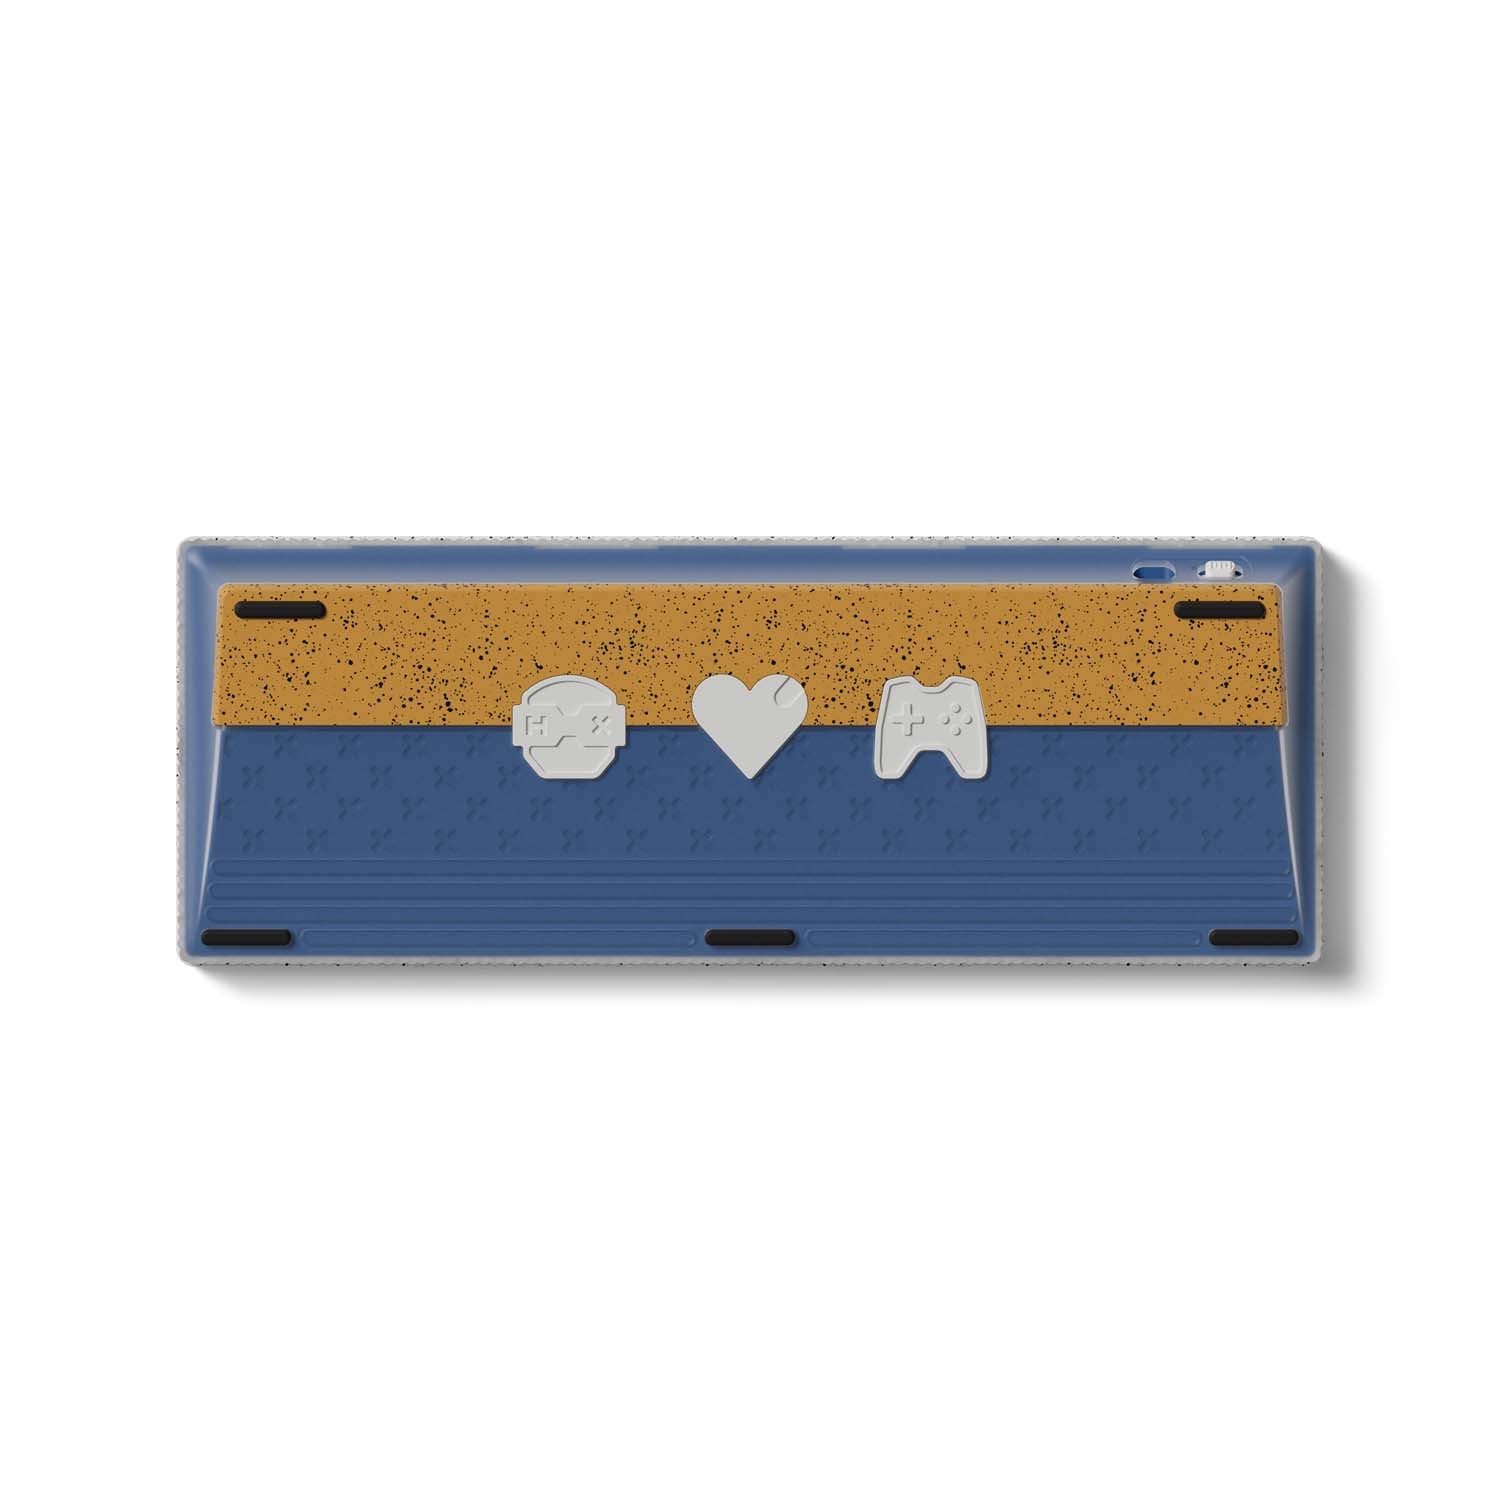 MelGeek Modern97 Work&Game Compact Mechanical Keyboard